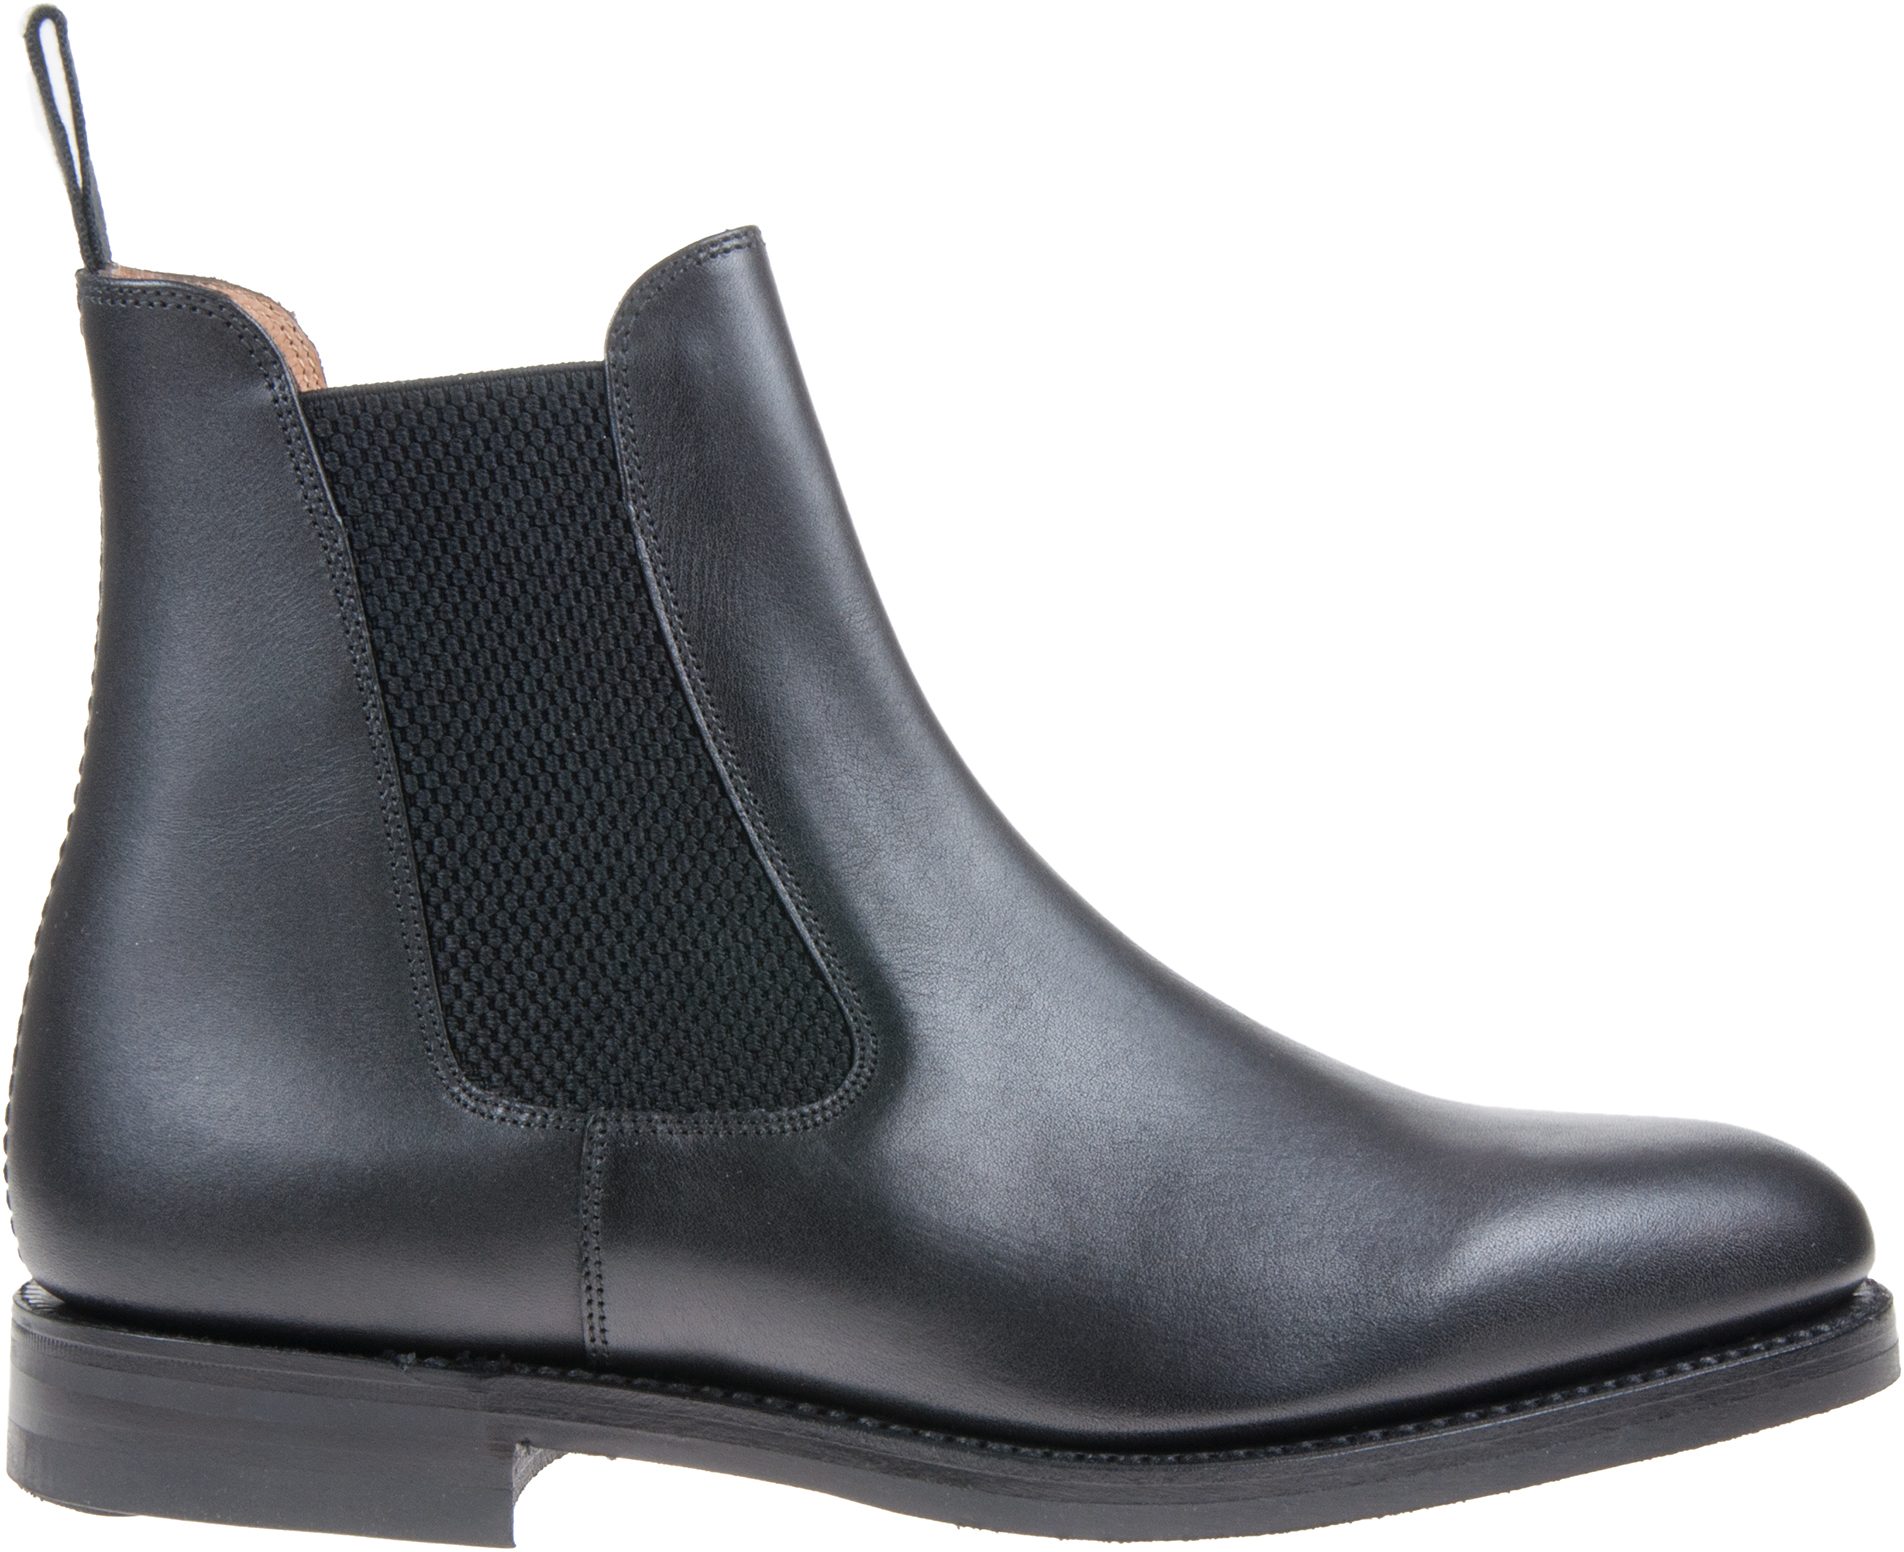 Loake Blenheim Black Waxy - Formal Boots - Humphries Shoes